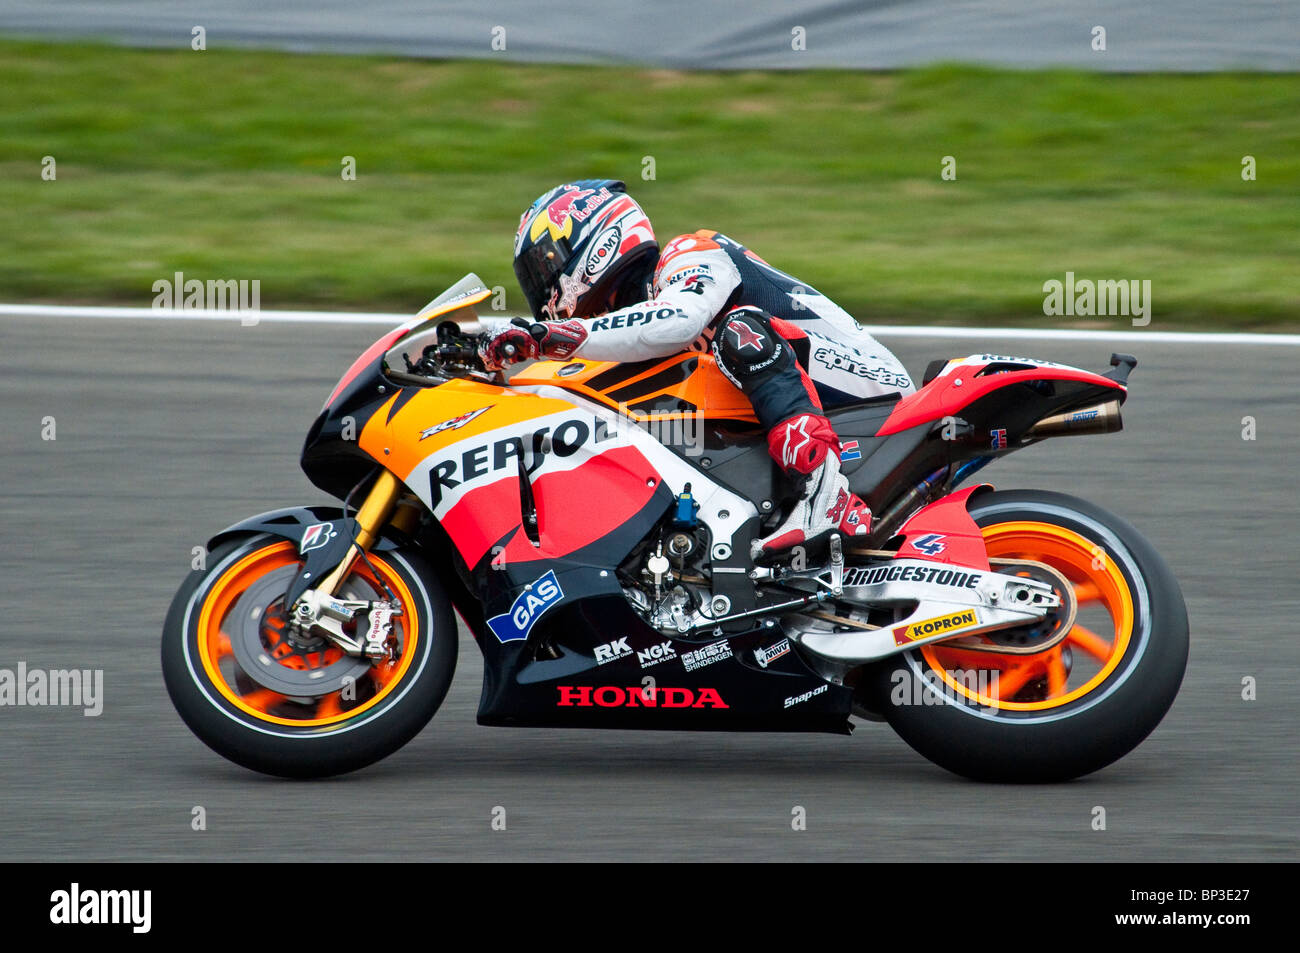 Andrea Dovizioso MotoGP Motorcycle Racer at Silverstone Stock Photo